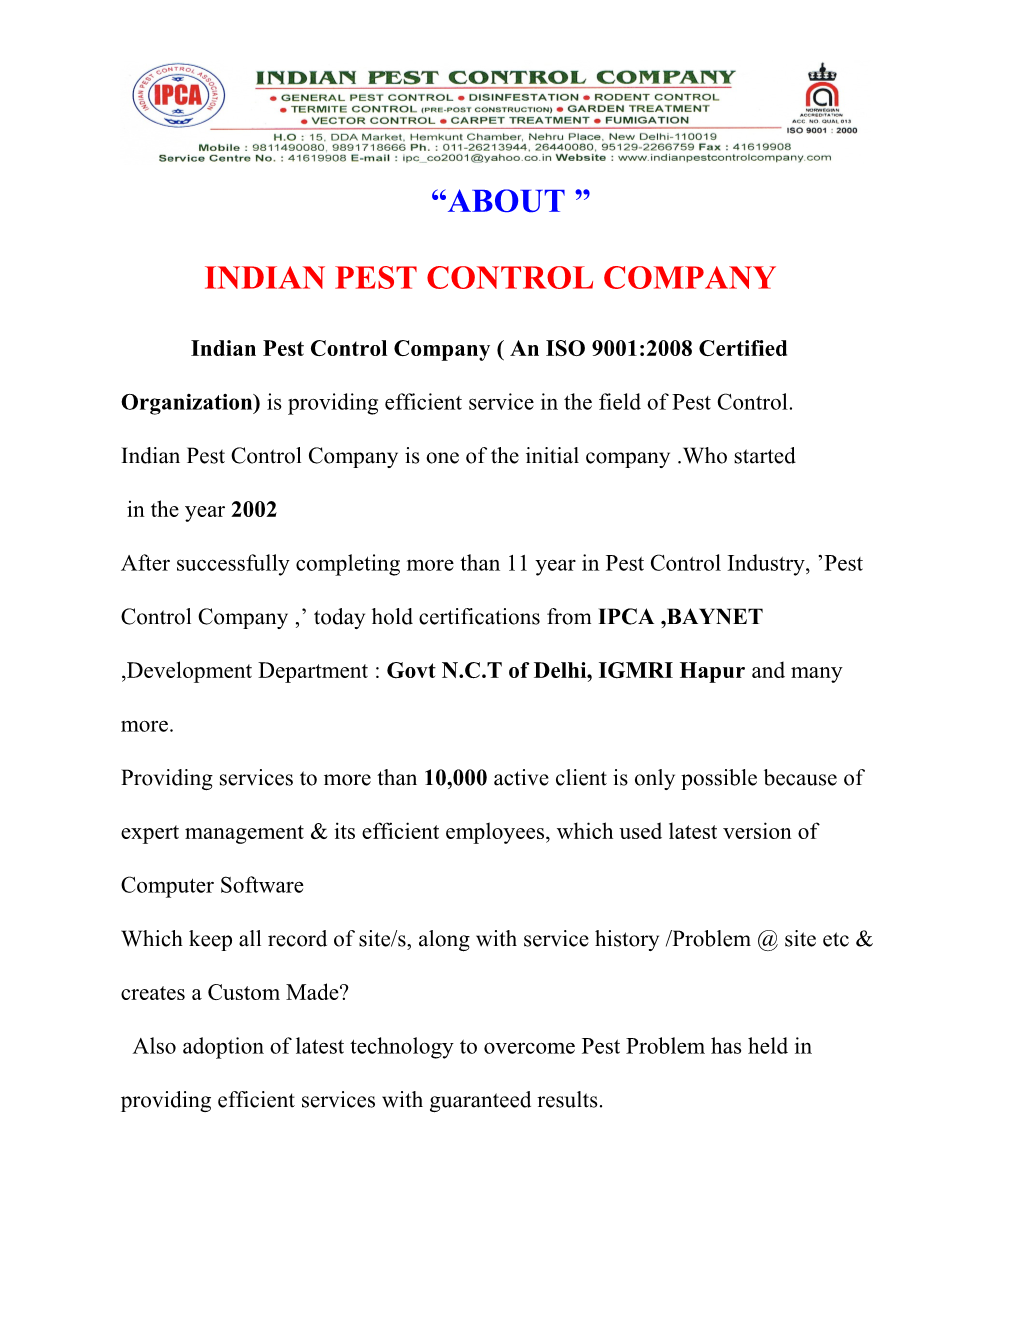 Indian Pest Control Company